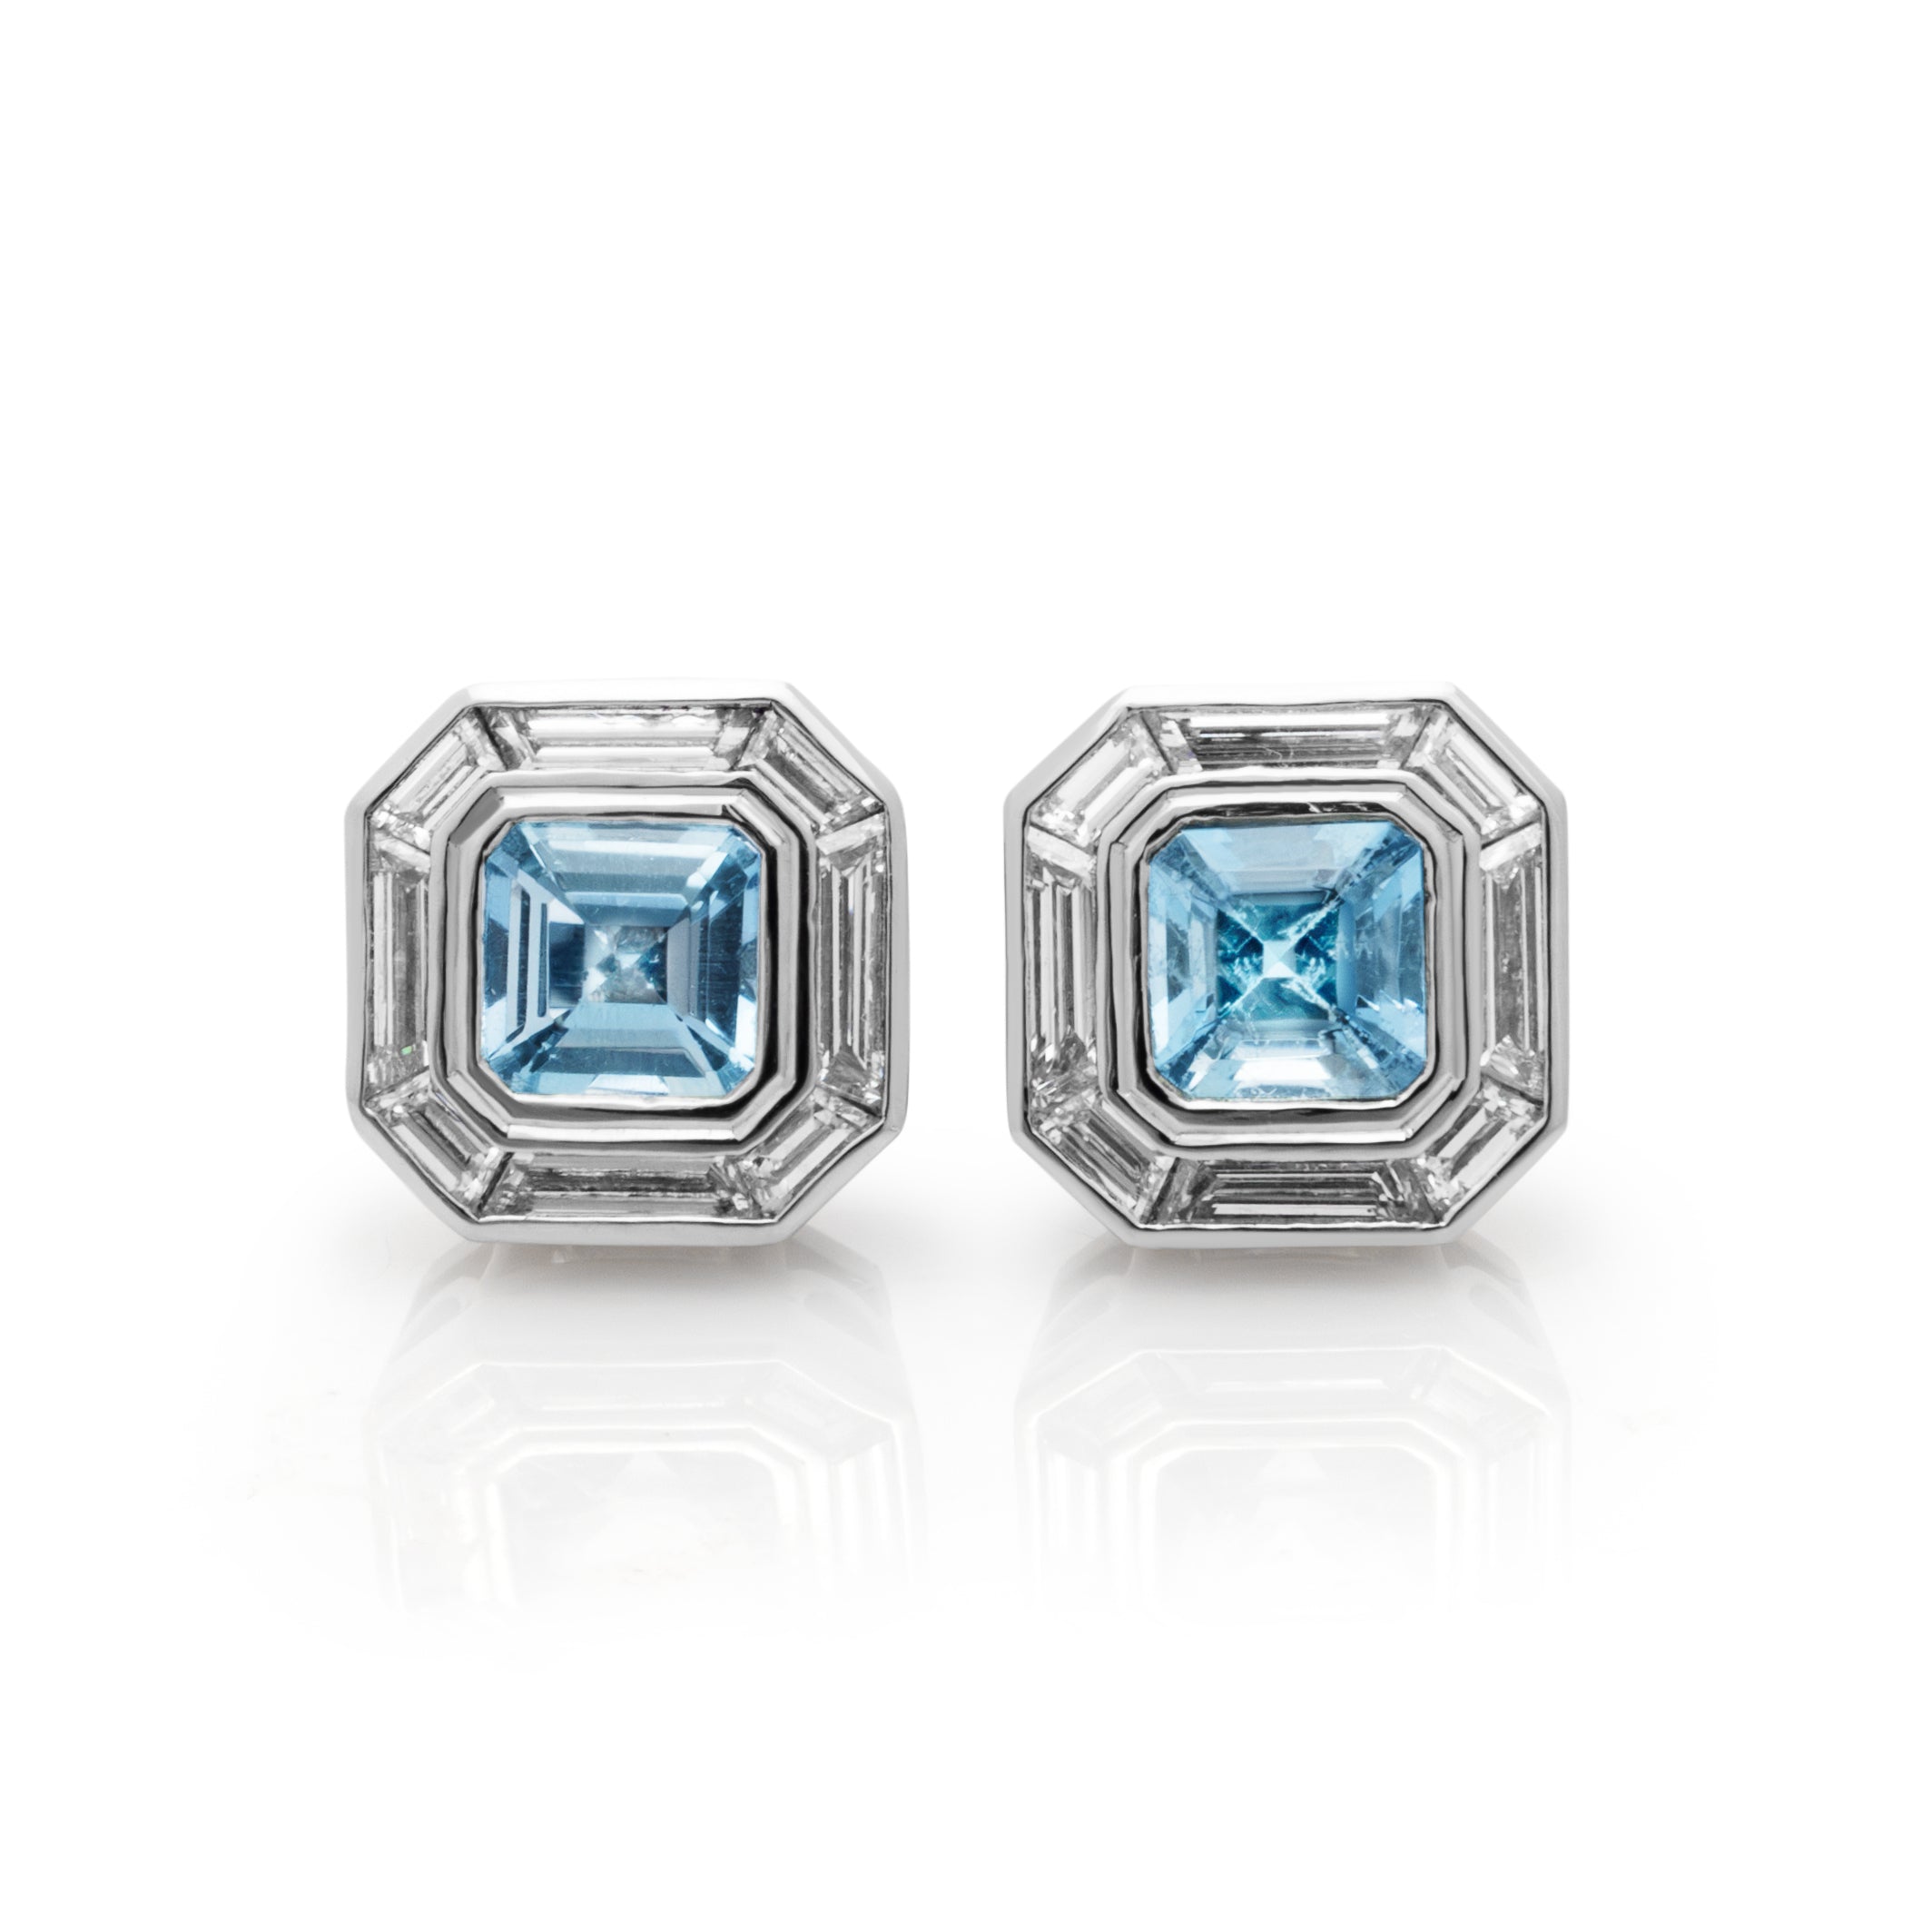 Aquamarine and baguette Diamond earrings. Serena Ansell Bespoke jewellery design. Bespoke jewellery designer London. Bespoke earrings London.  